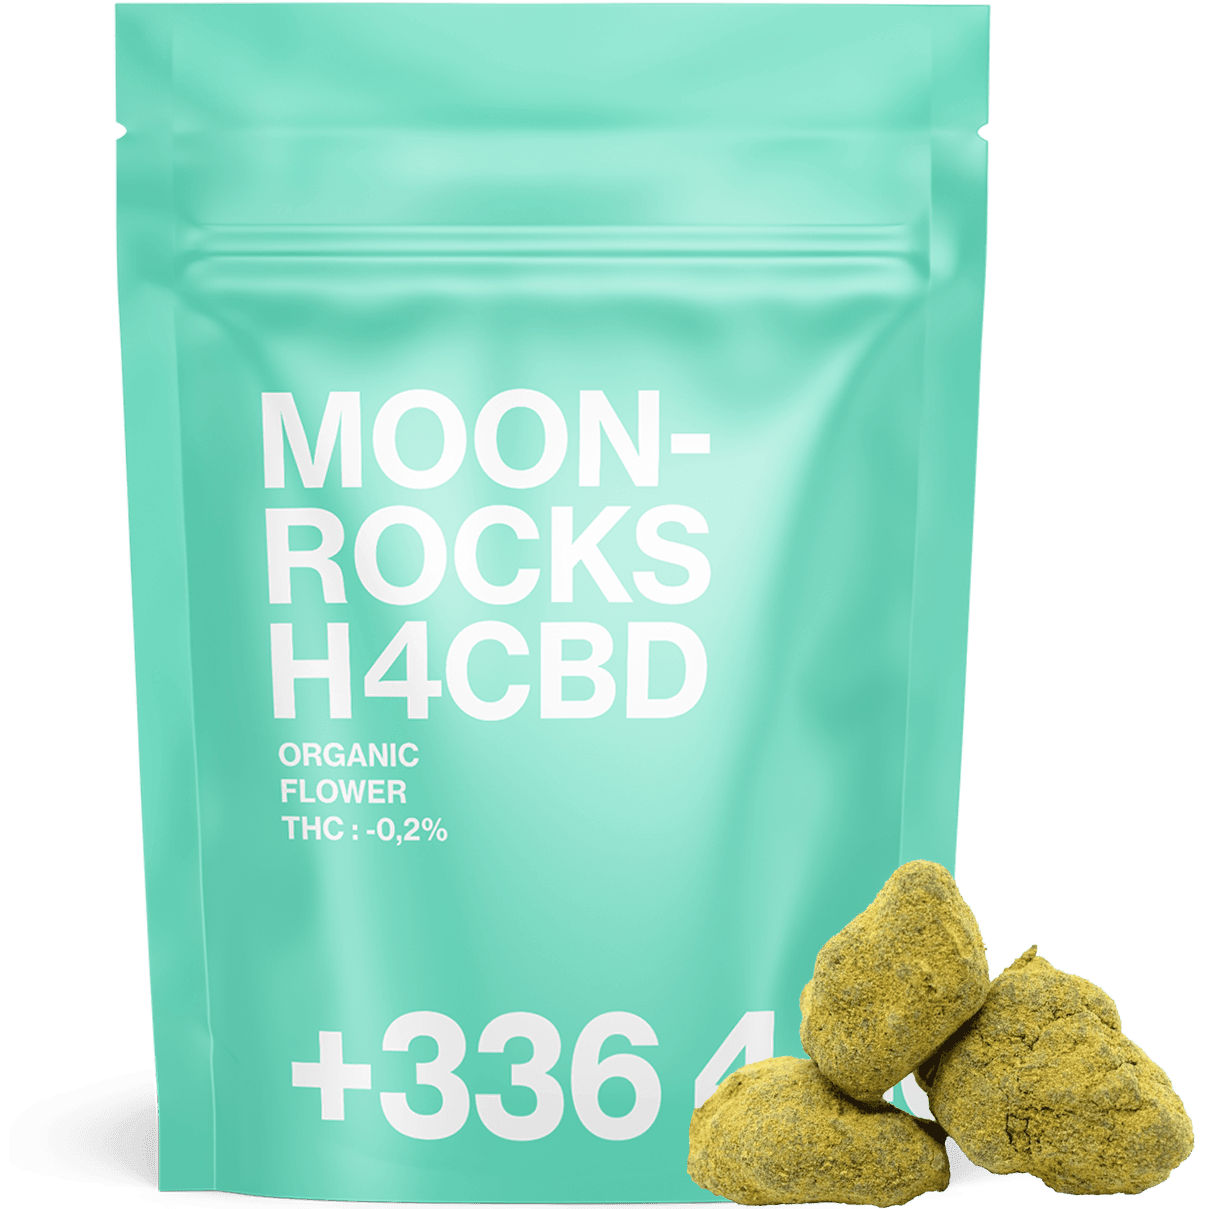 Moonrock H4CBD